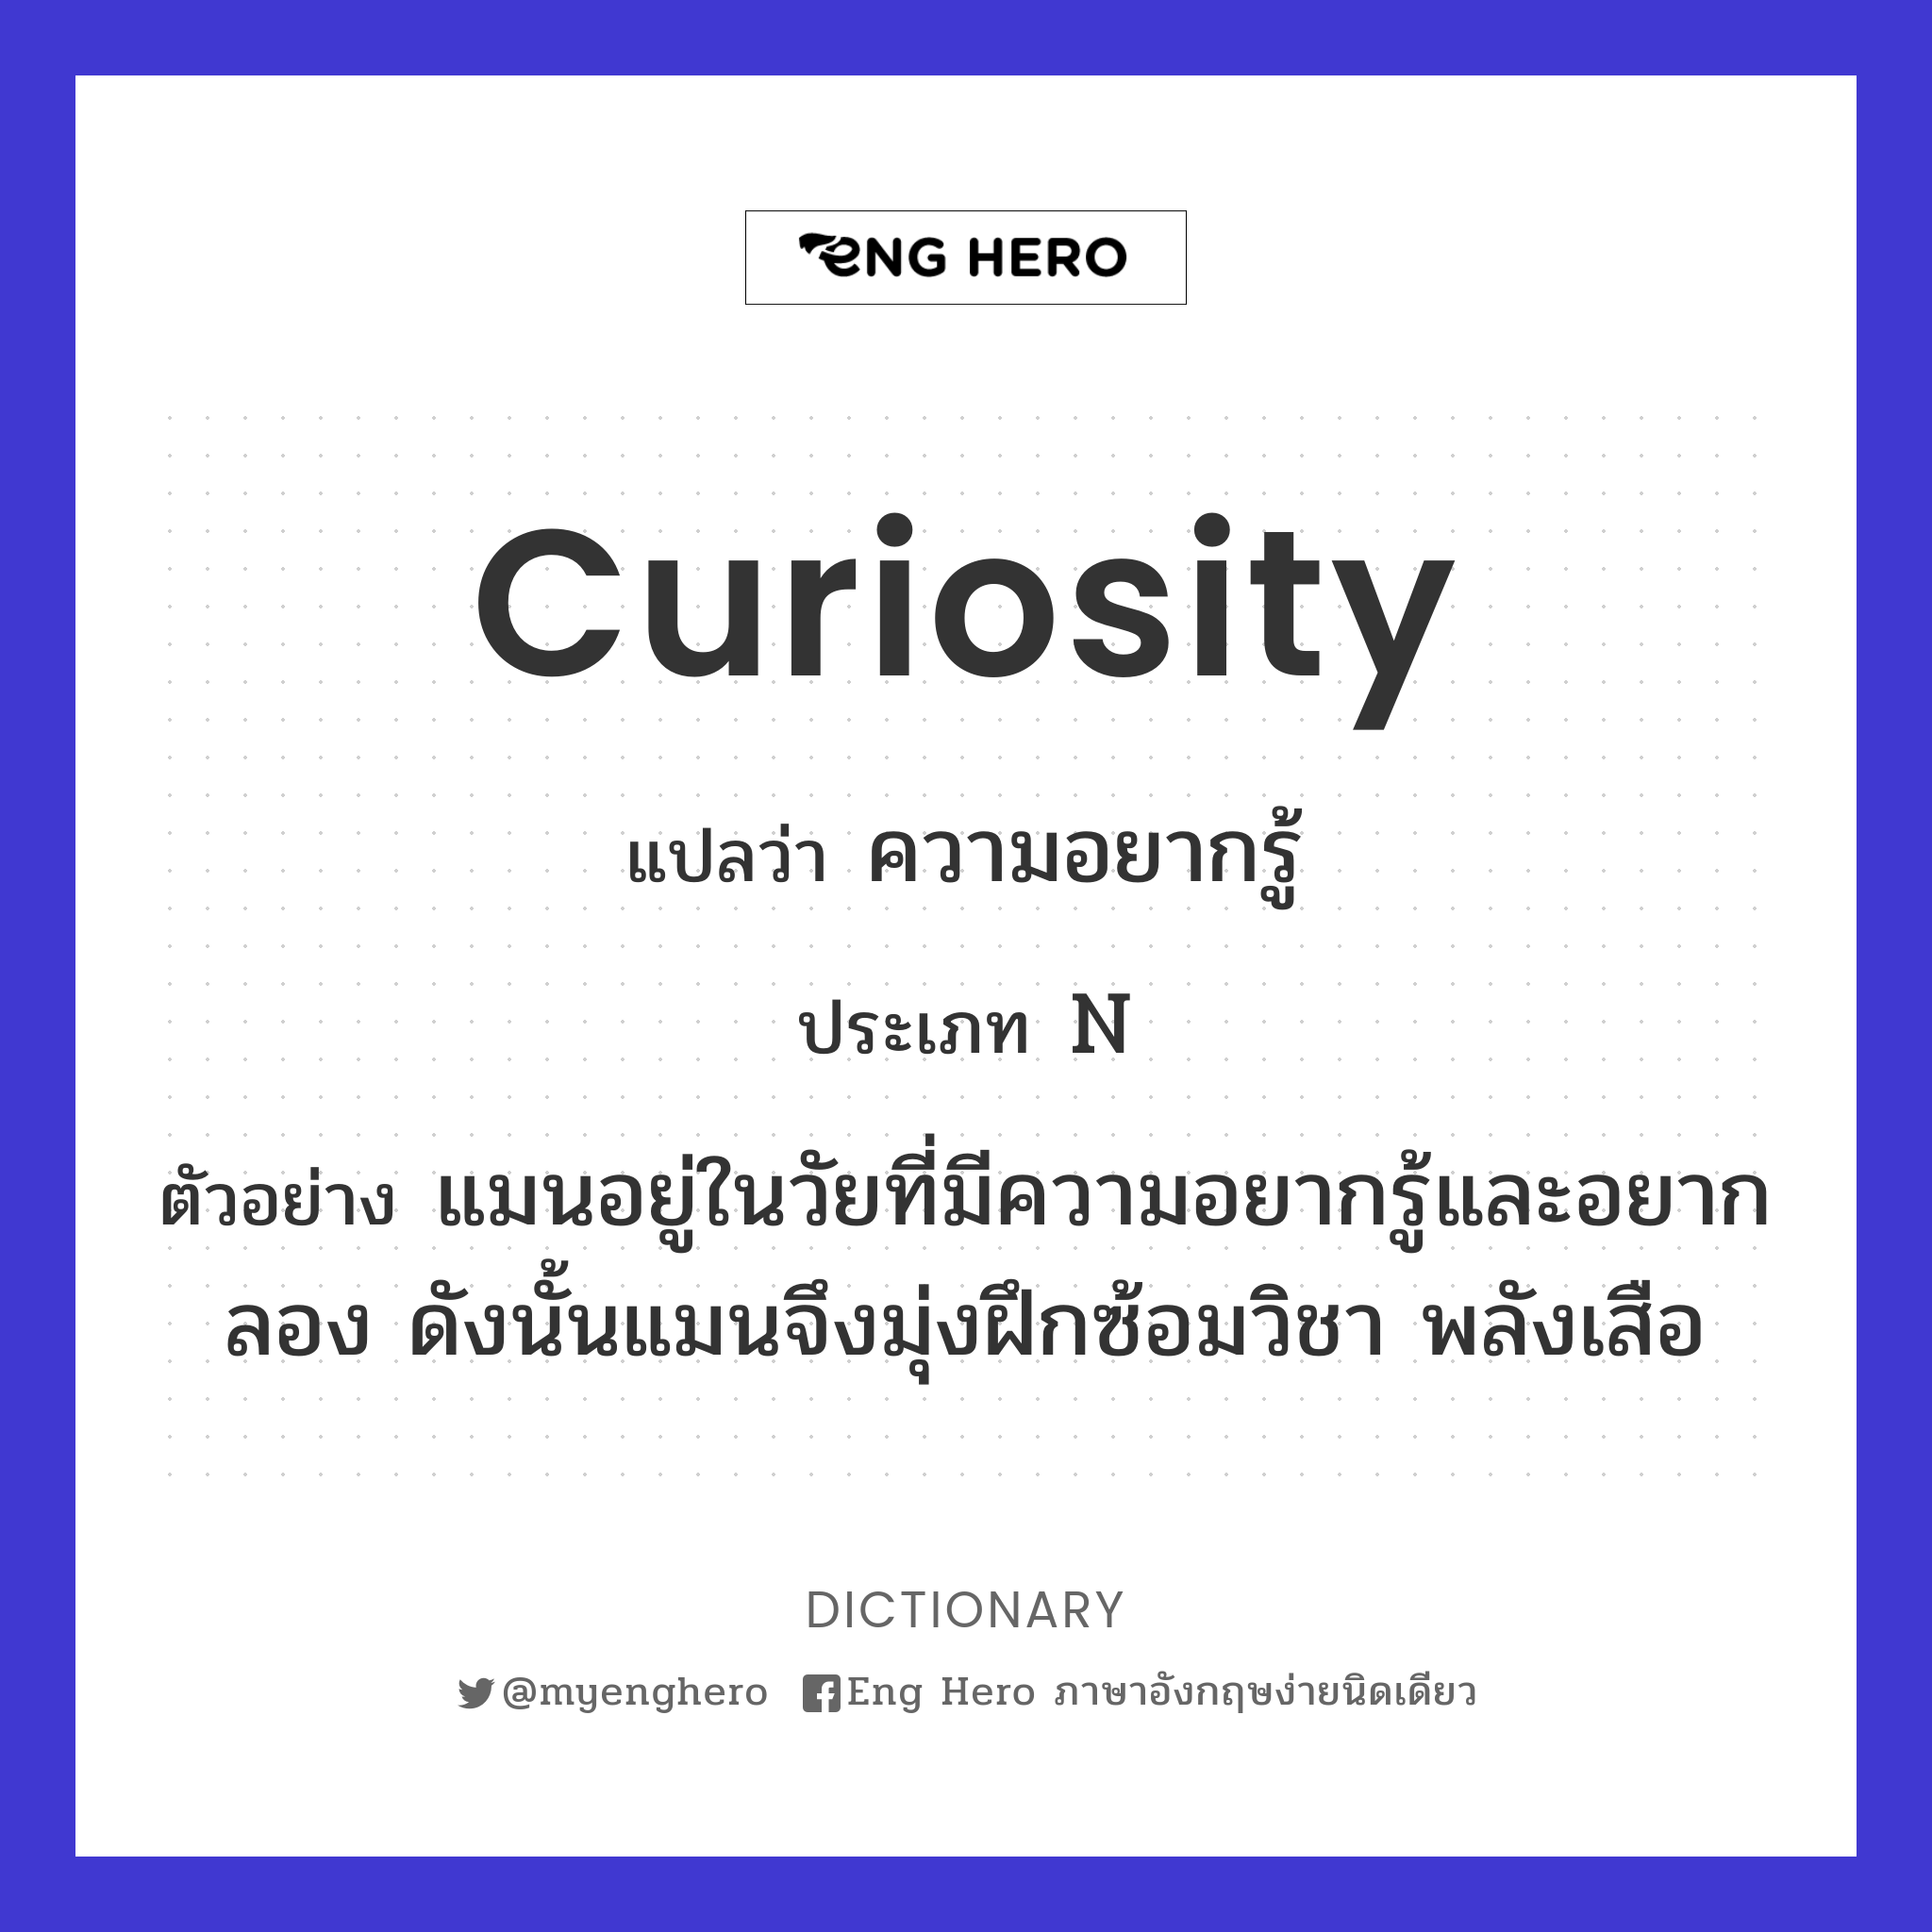 curiosity